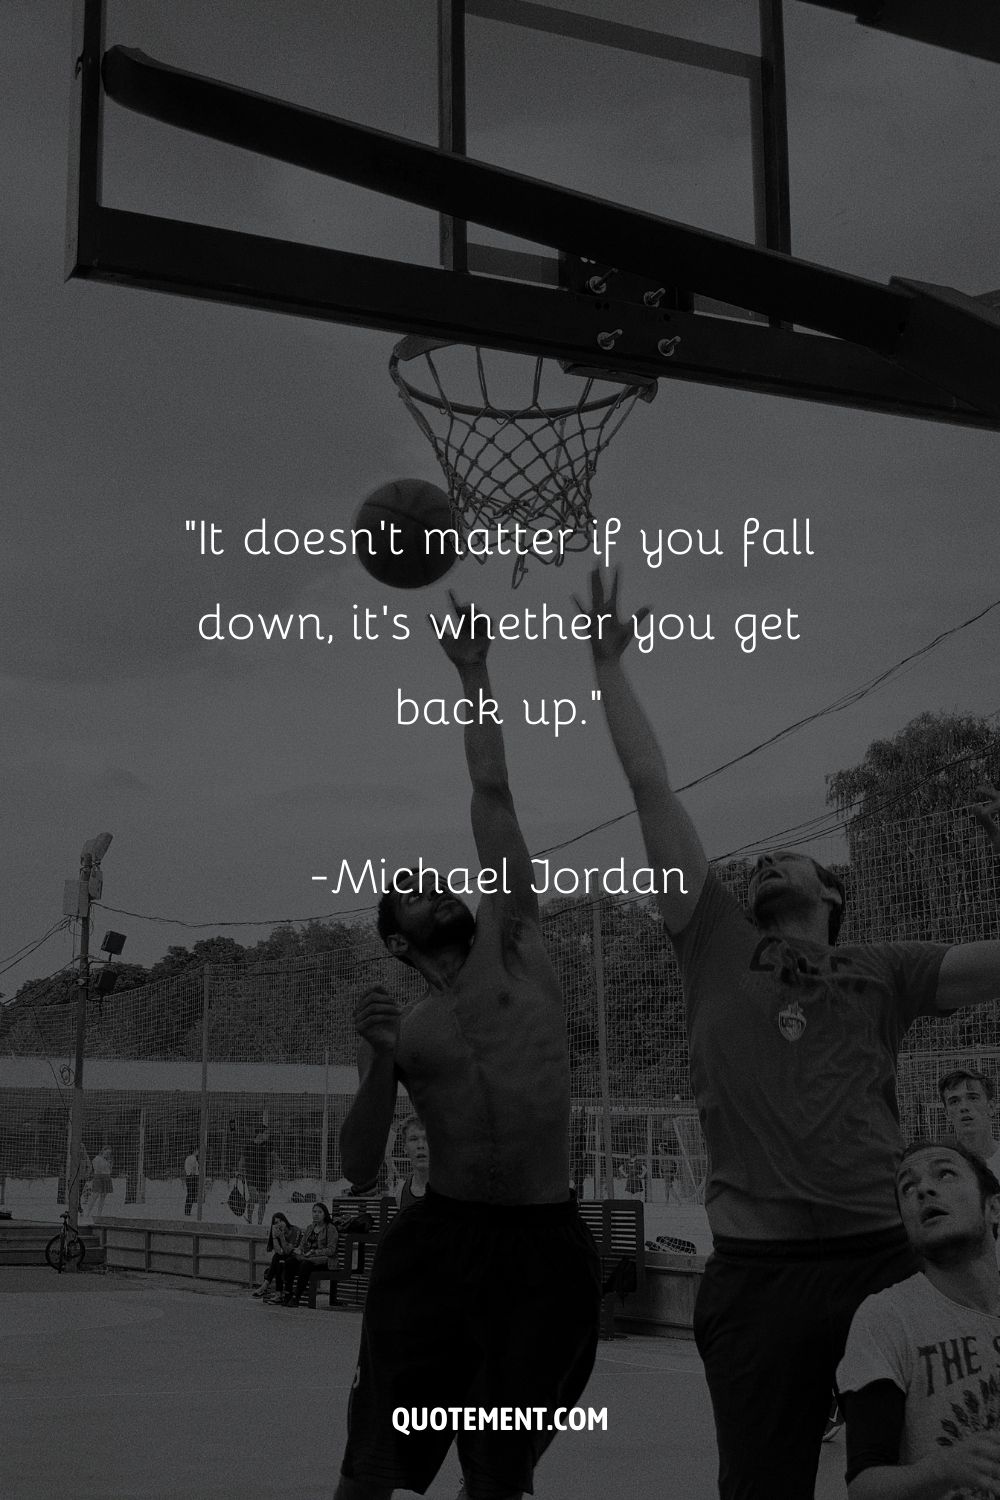 Jugadores en pista al aire libre representando una cita inspiradora de Michael Jordan.